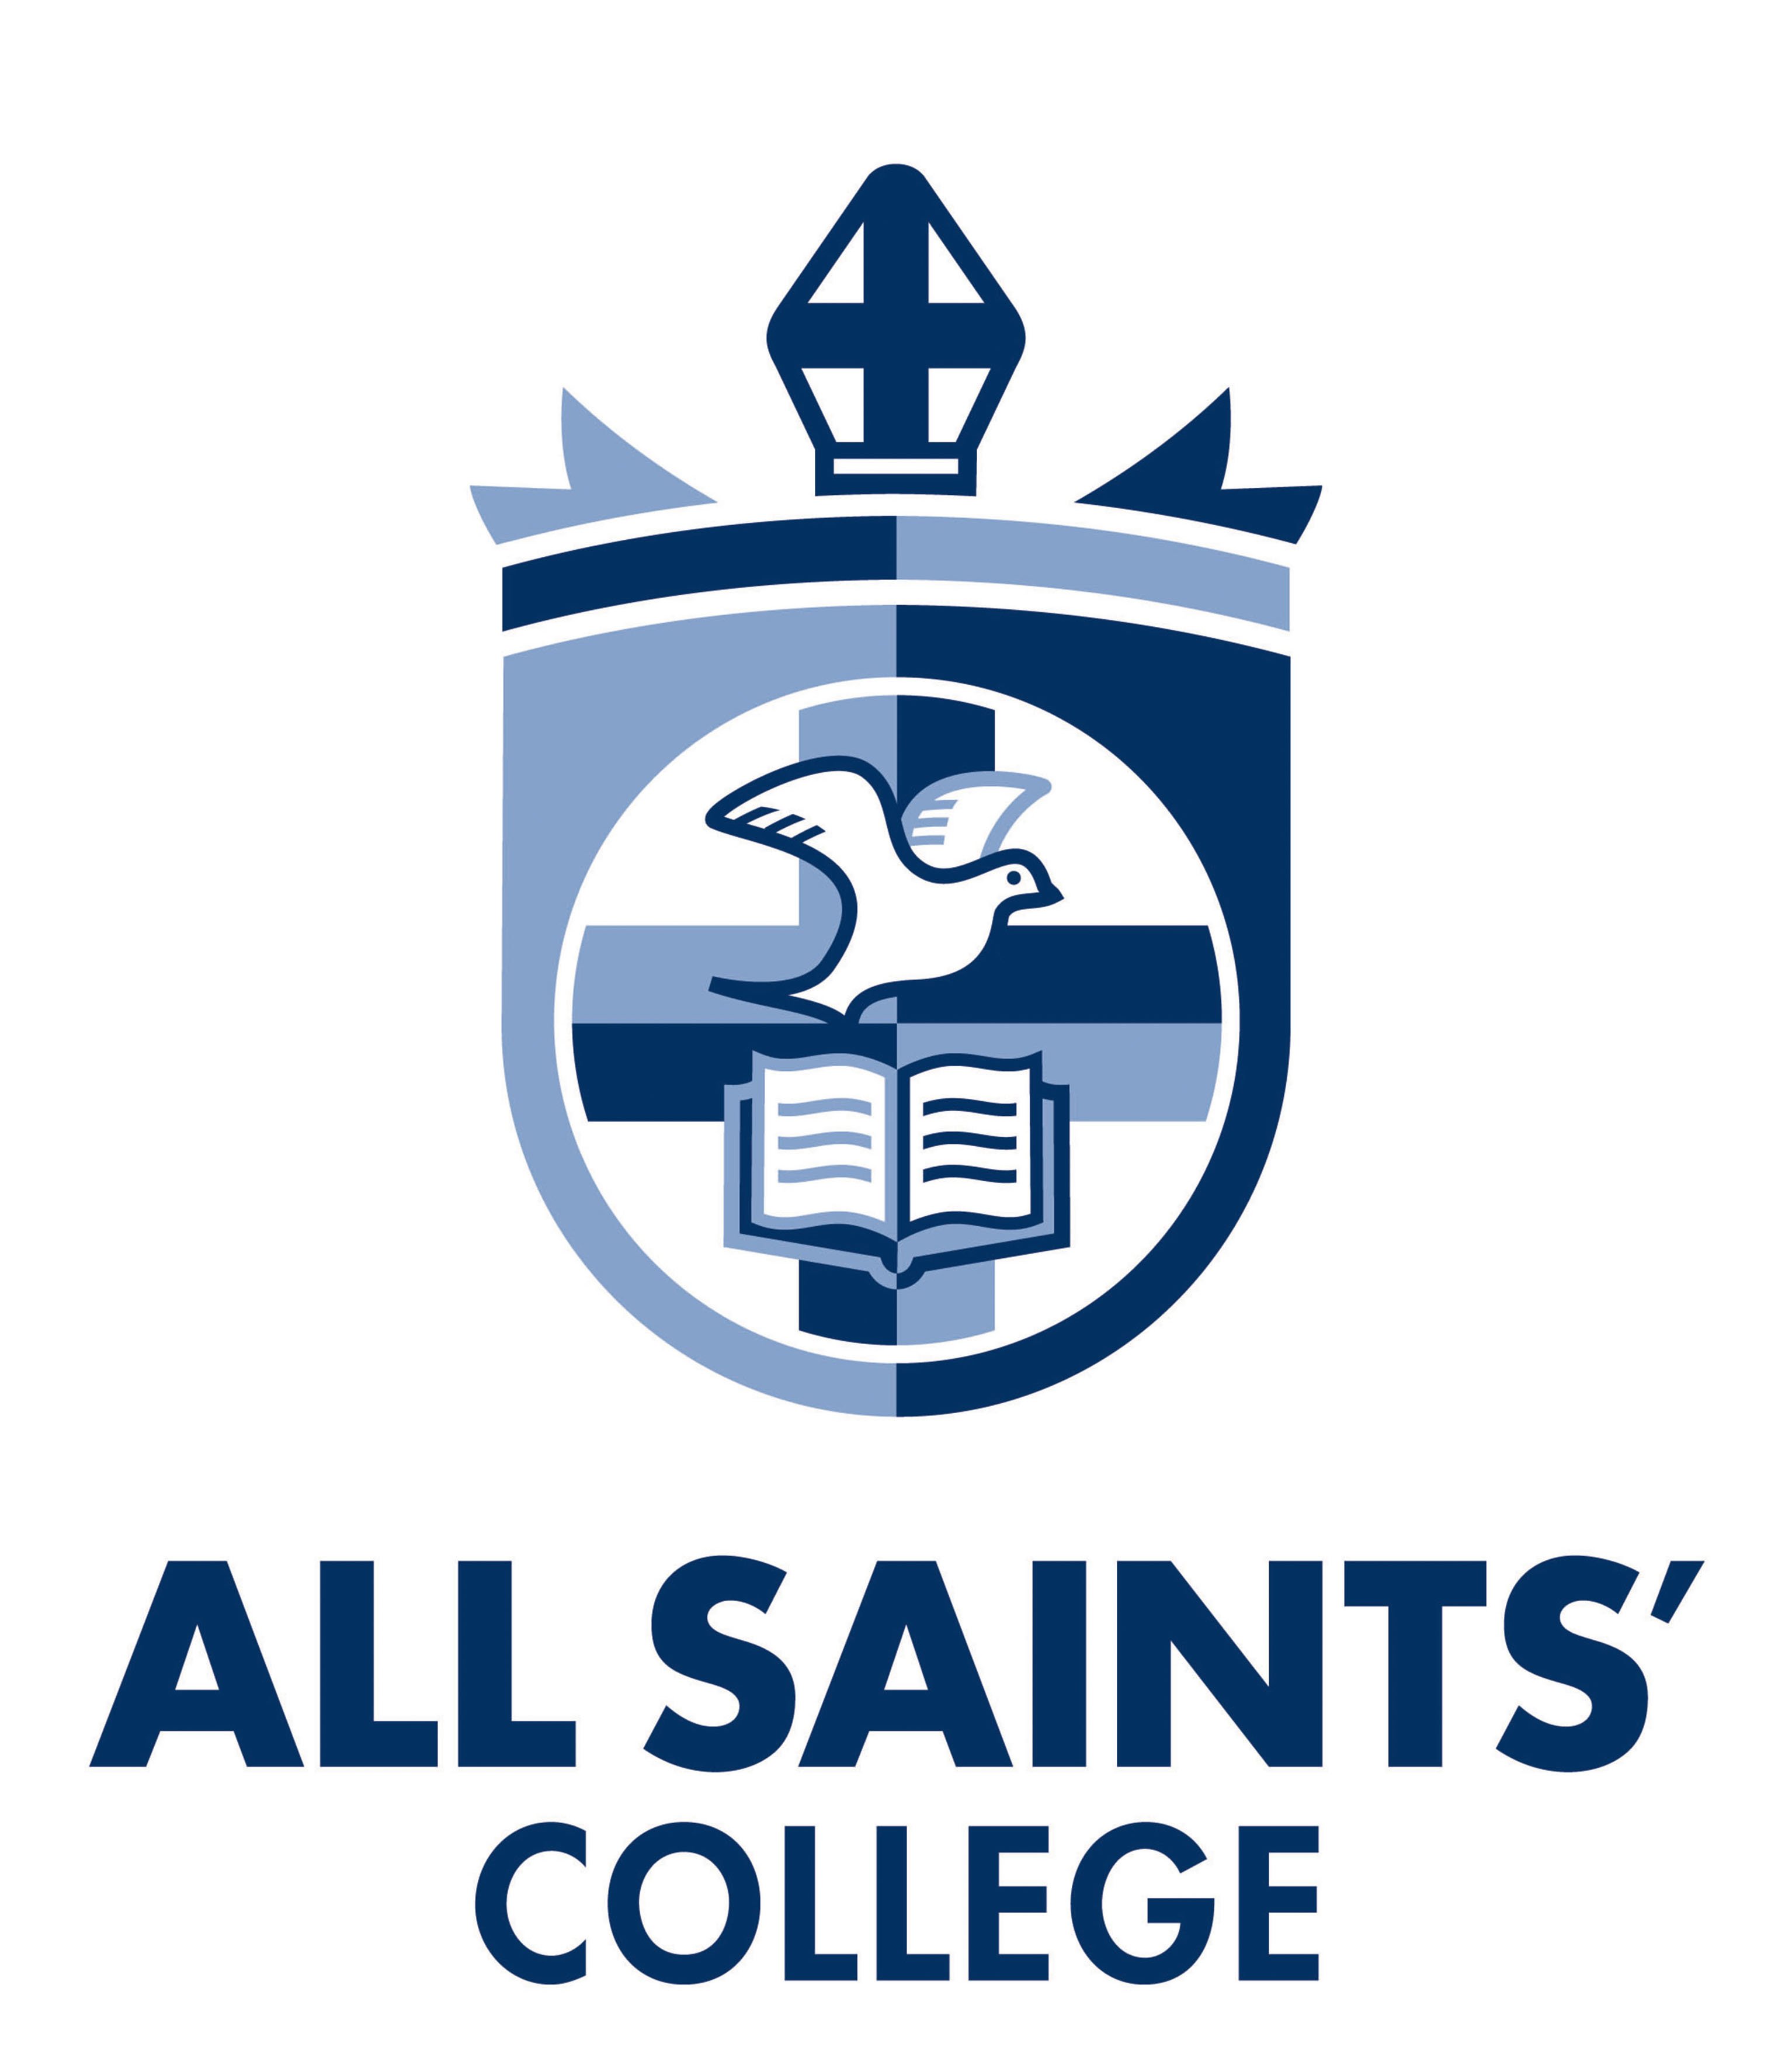 All Saints' College, Bull Creek, WA